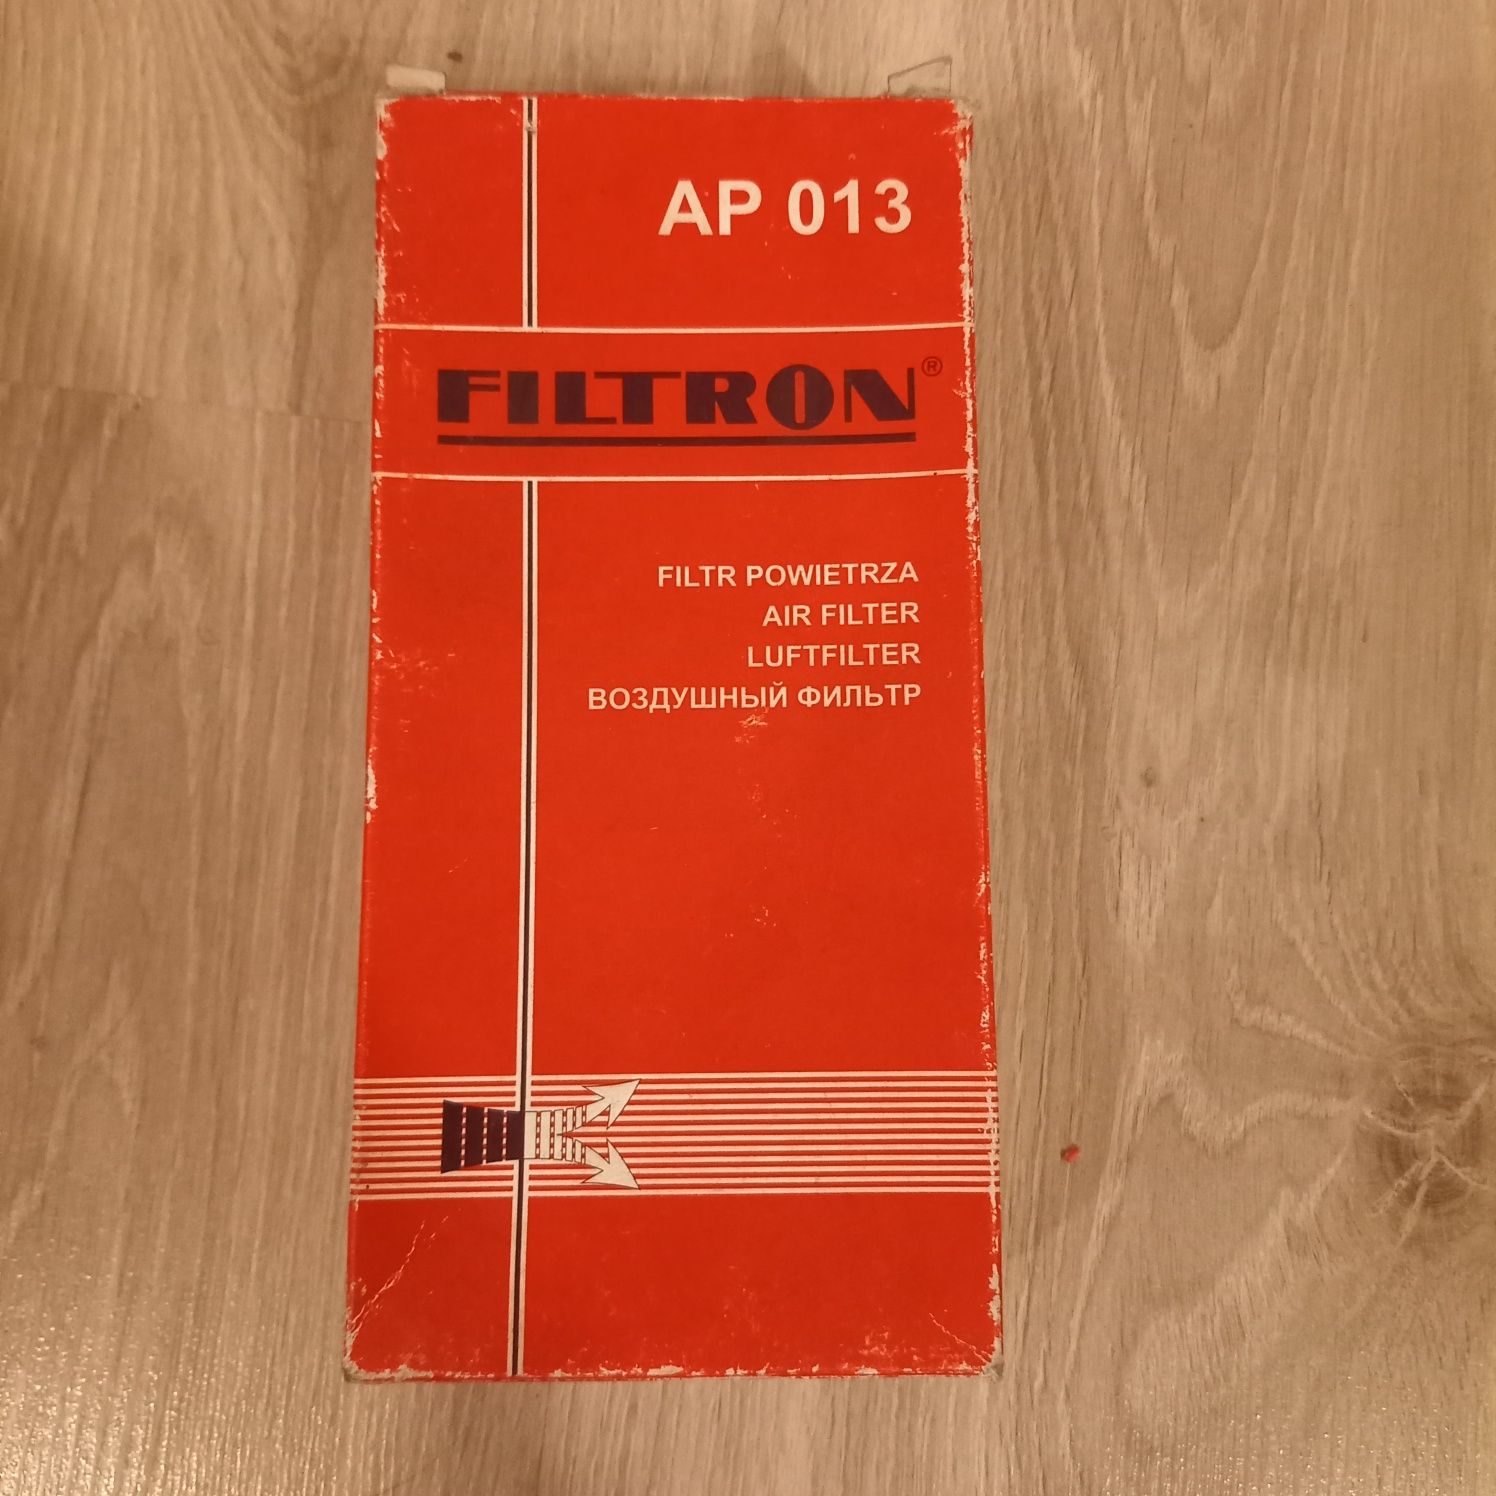 Filtr powietrza Filtron AP013 nowy